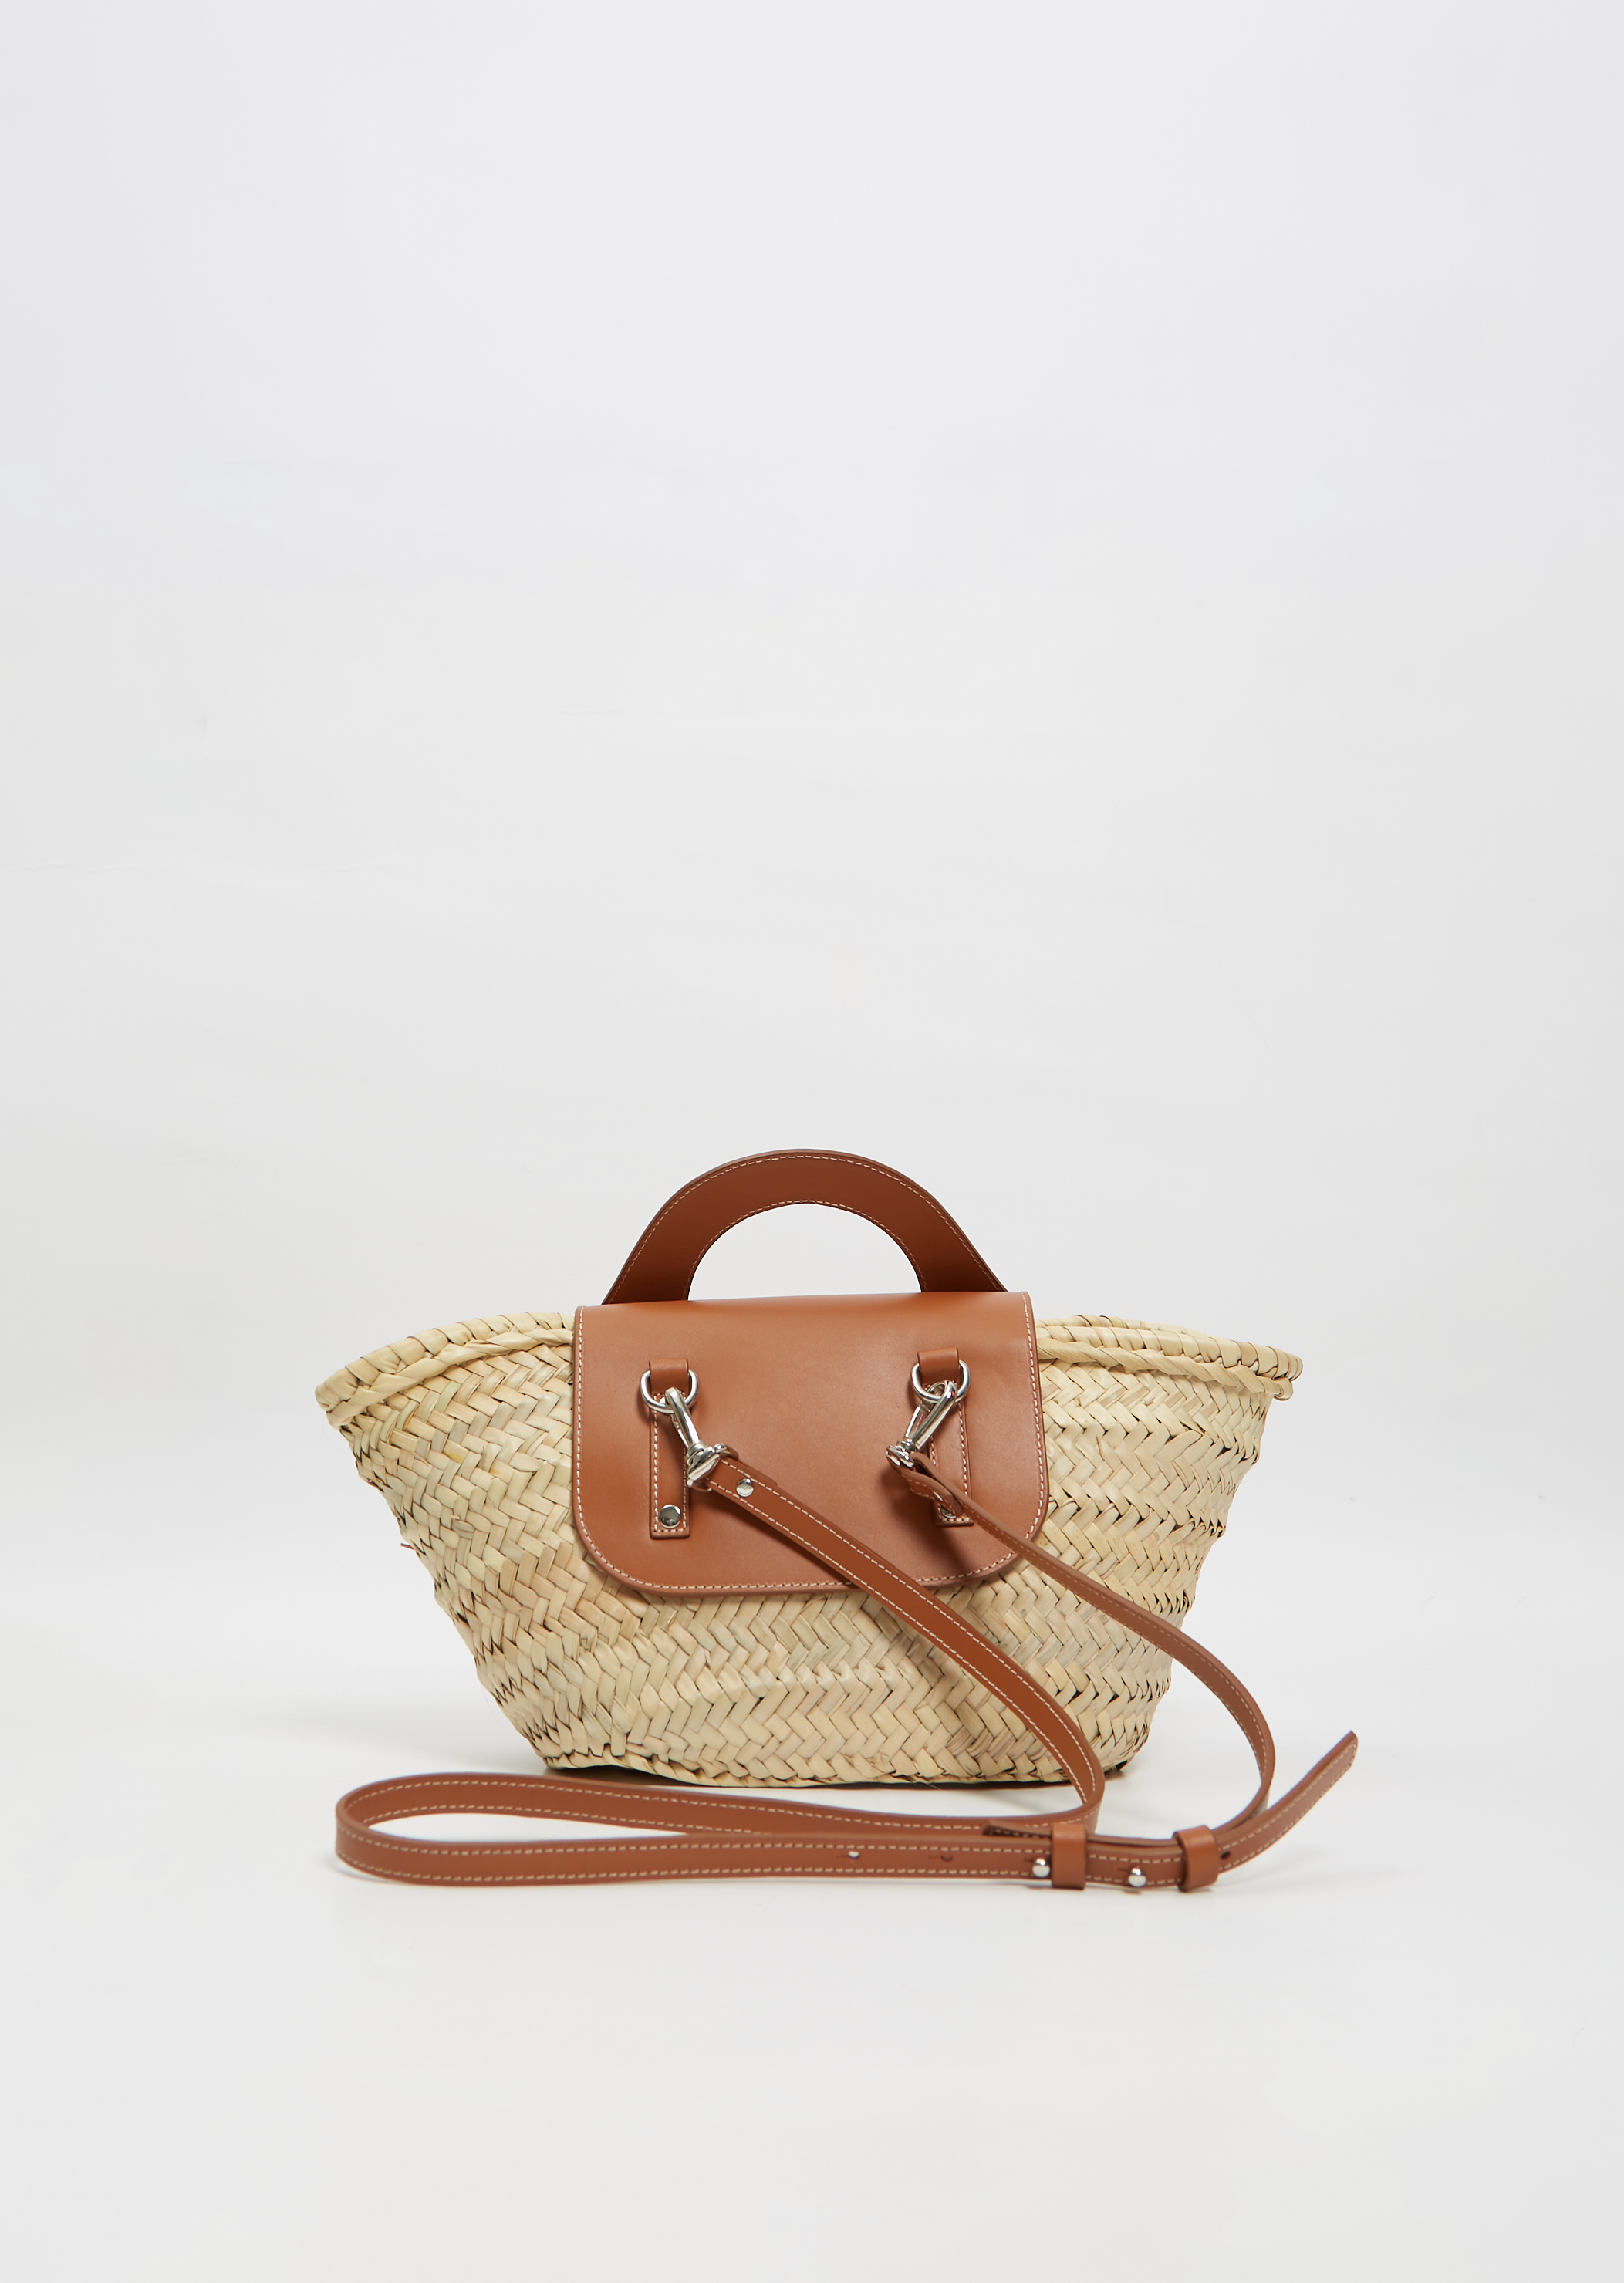 Louis Vuitton Art Bags Belgium, SAVE 40% 